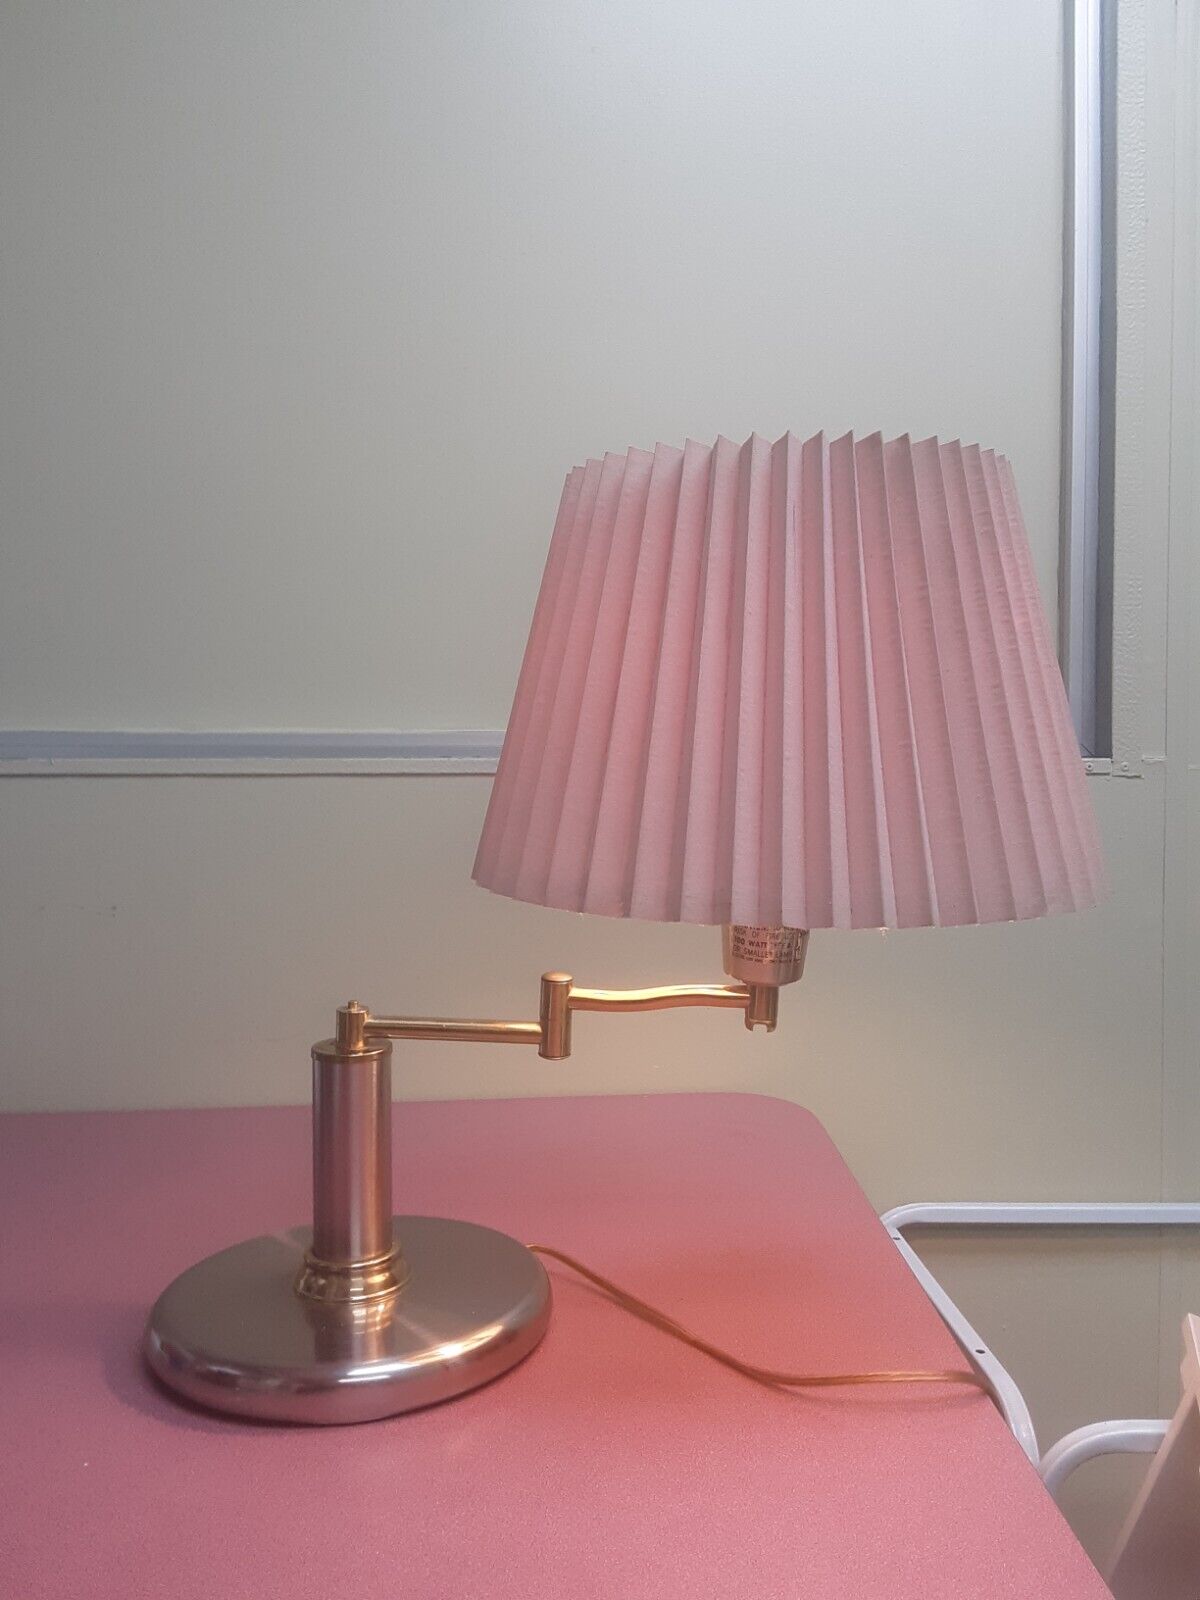 VINTAGE Swinging Arm Adjustable Table Lamp - 3 Way Bulb Compatible